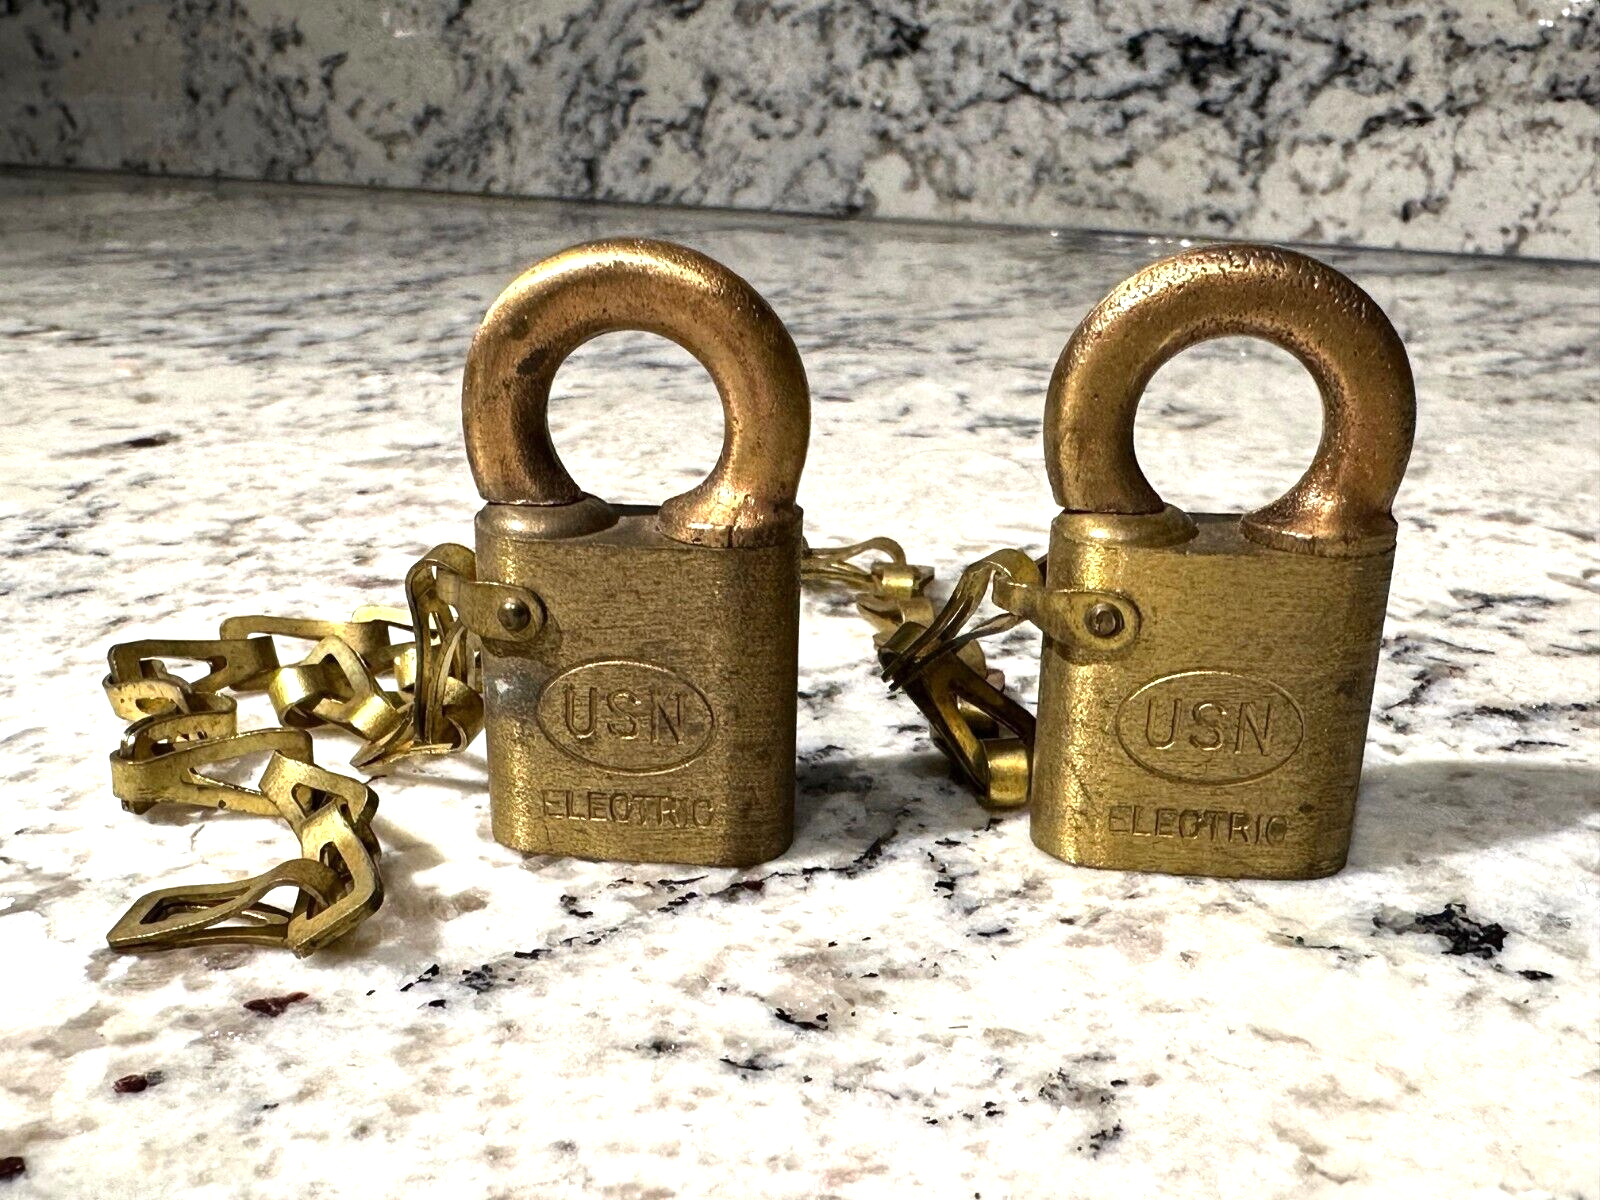 USN ELECTRIC Vintage Brass Locks w/Chain Corbin Cabinet Lock Co. USA Made Pair